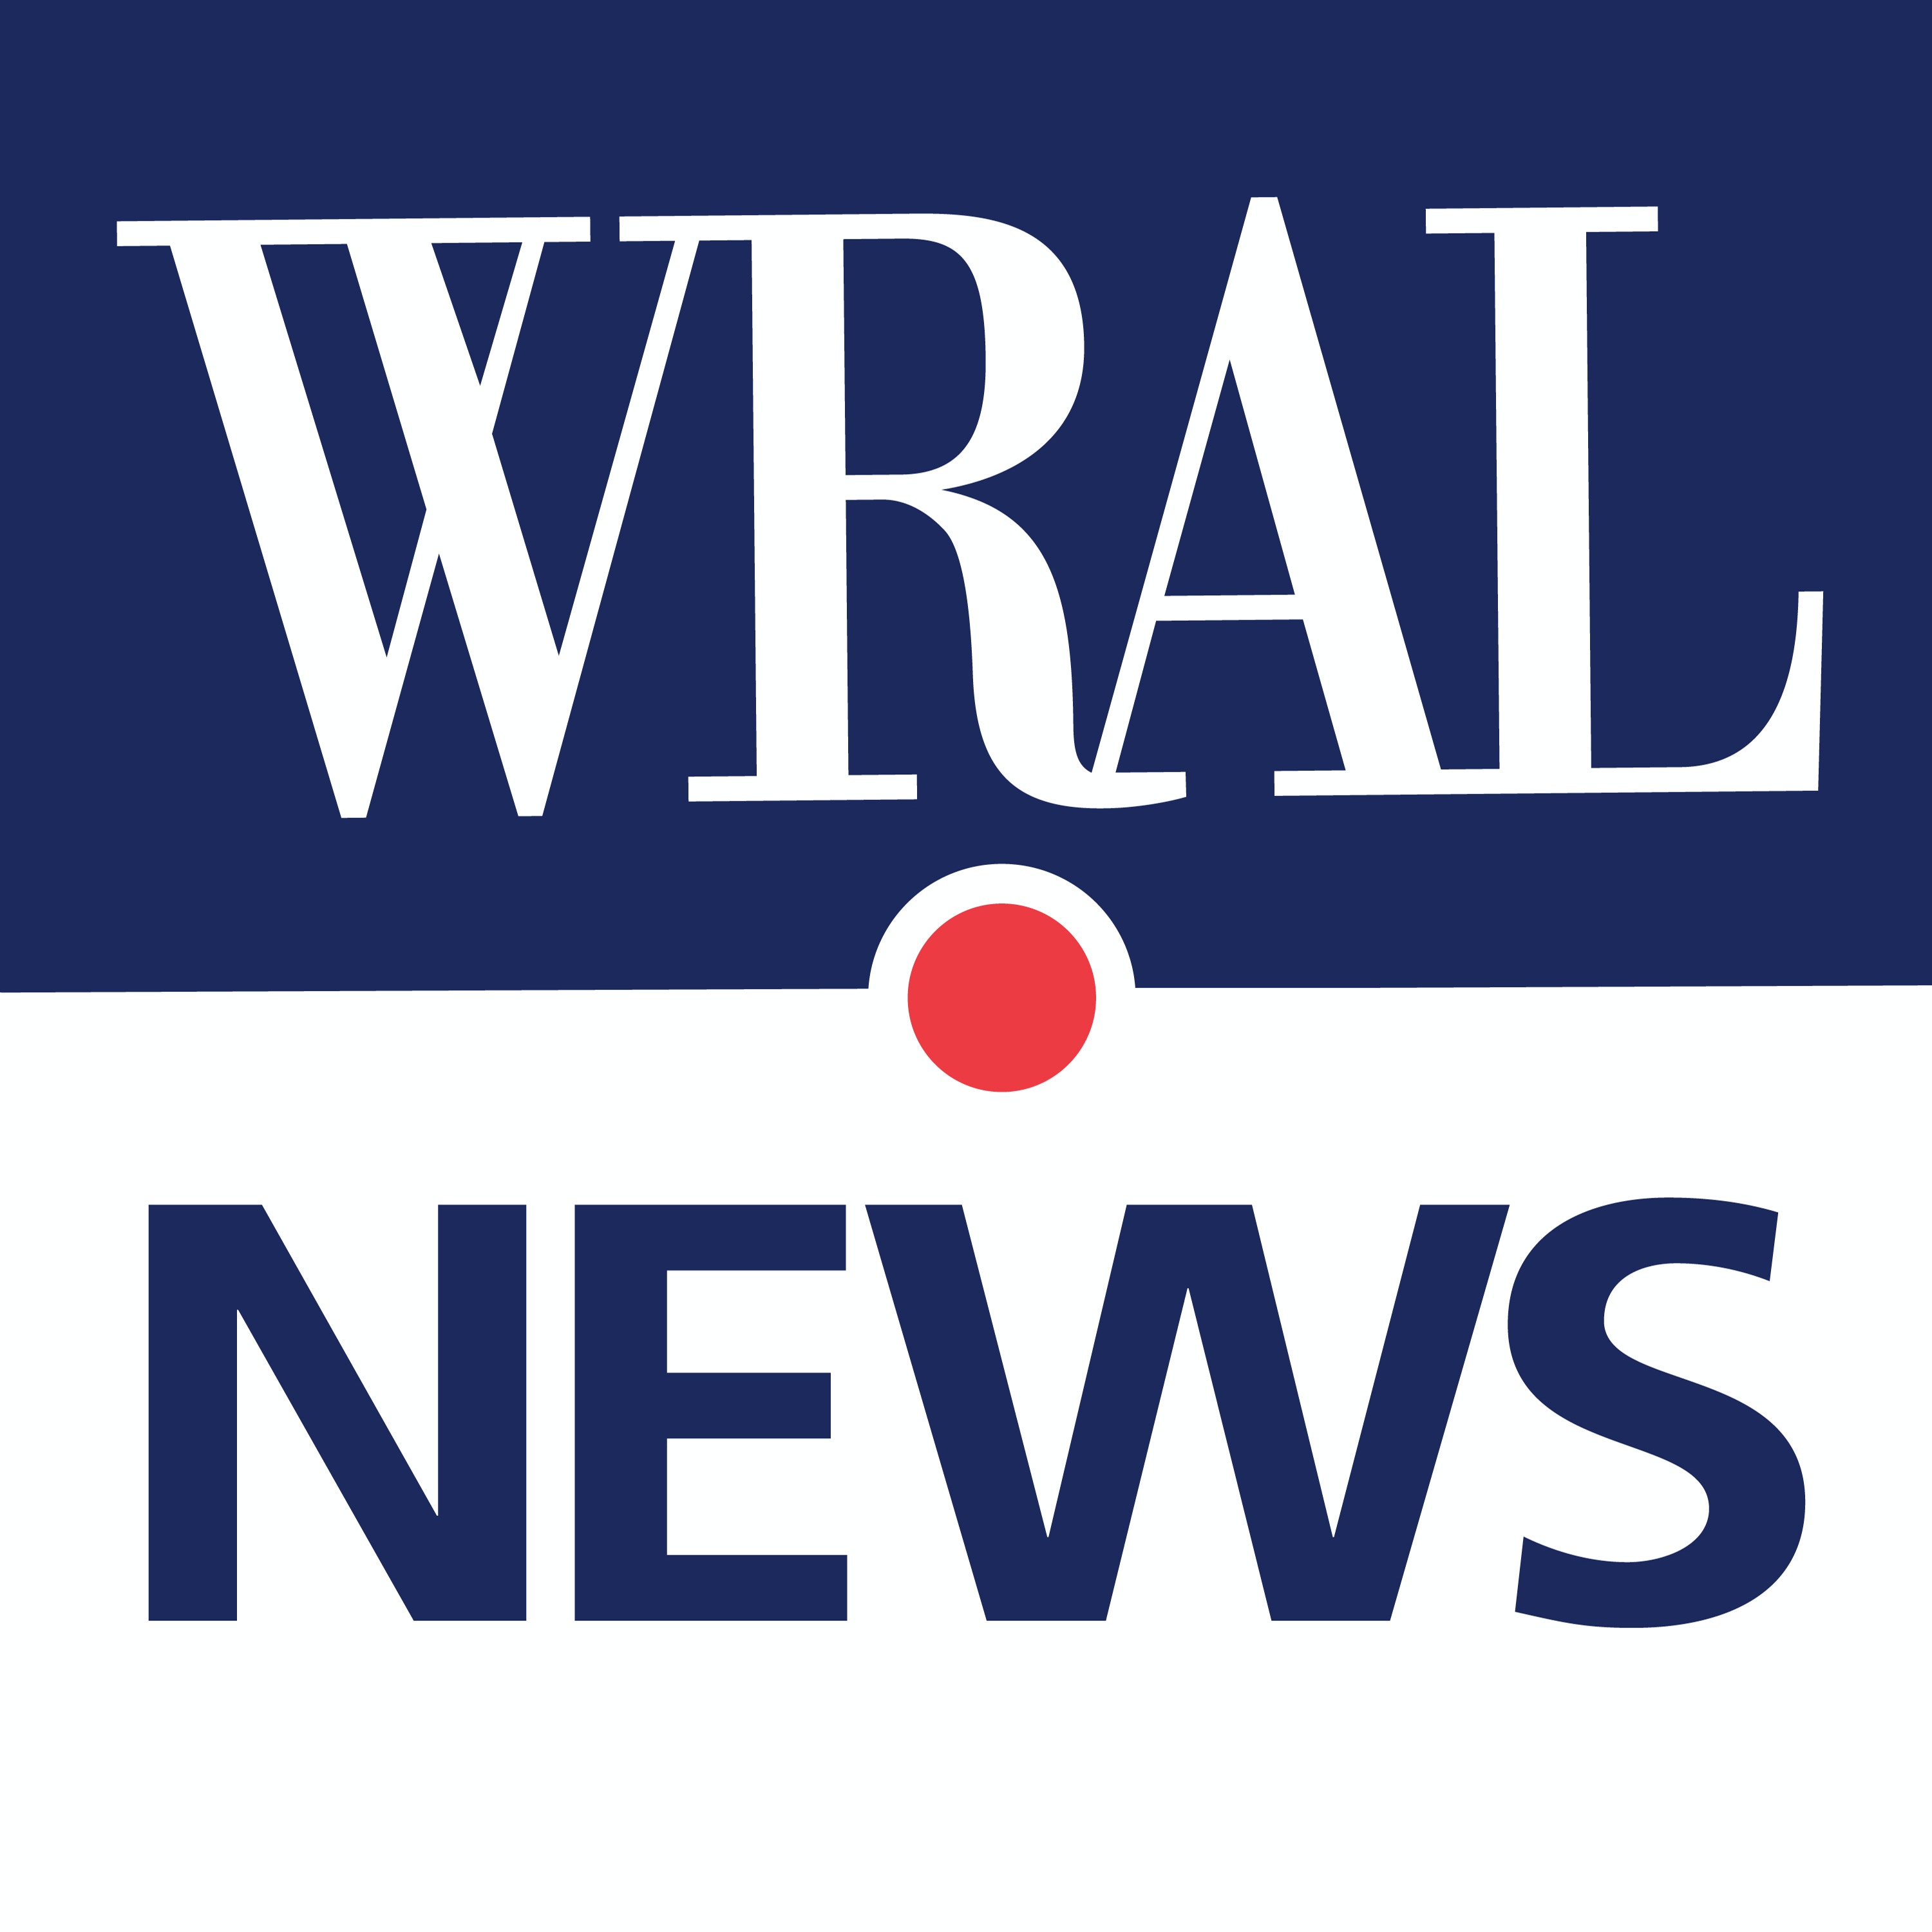 4:30AM News on WRAL - Tuesday, April 30, 2024